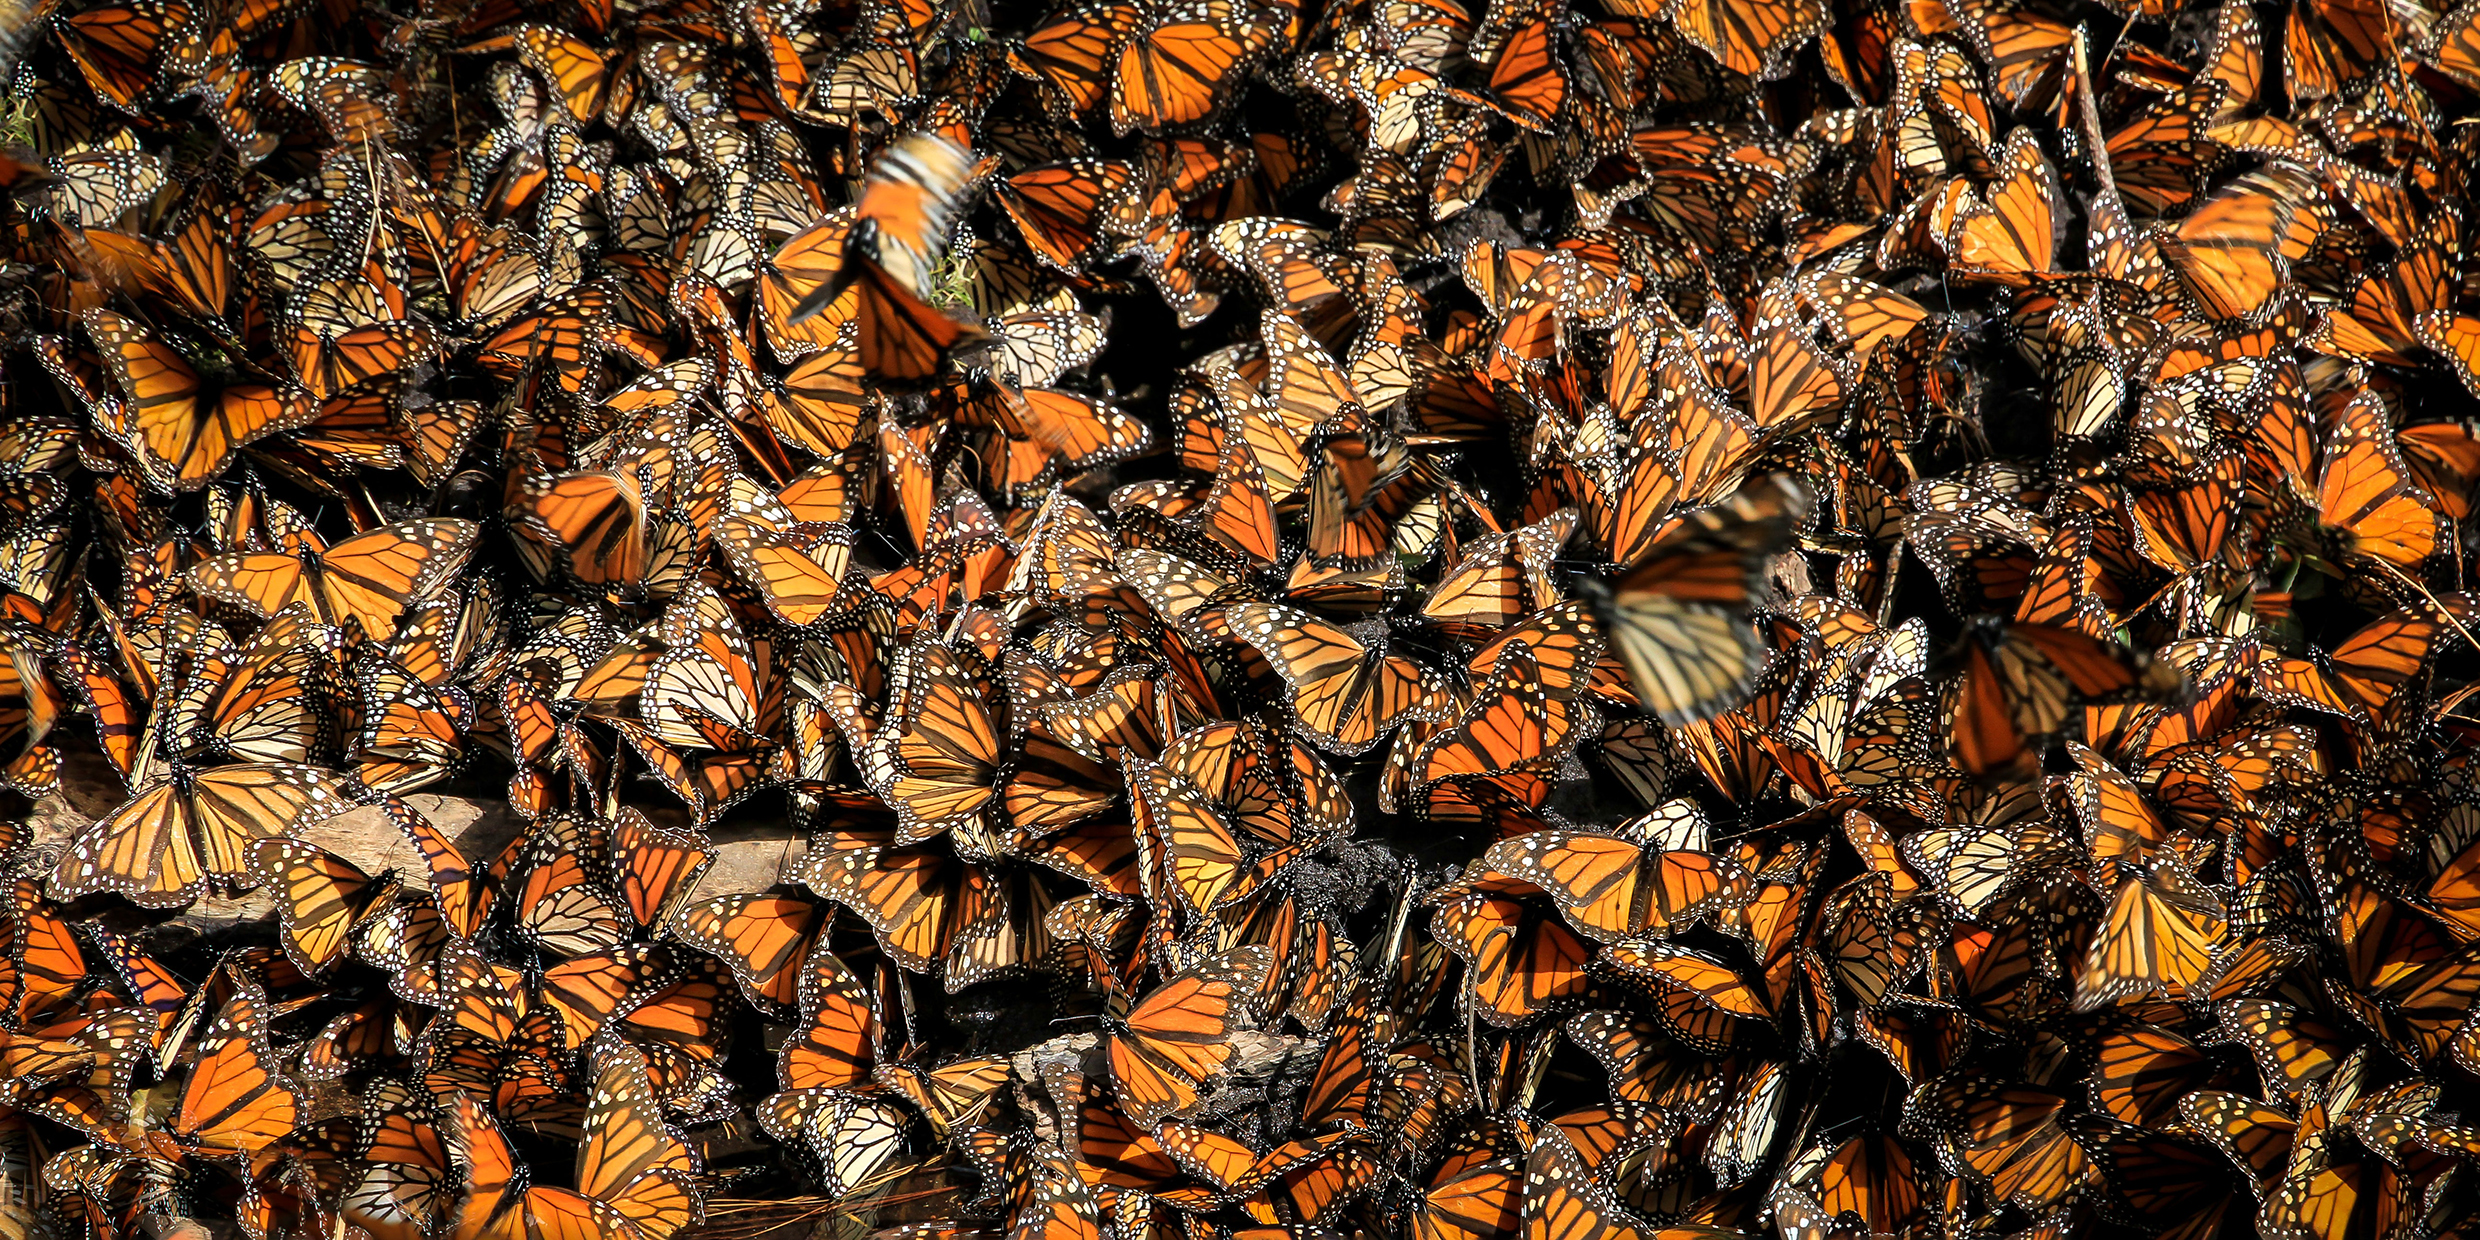 Closeup photo of a mass of orange-winged butterlies